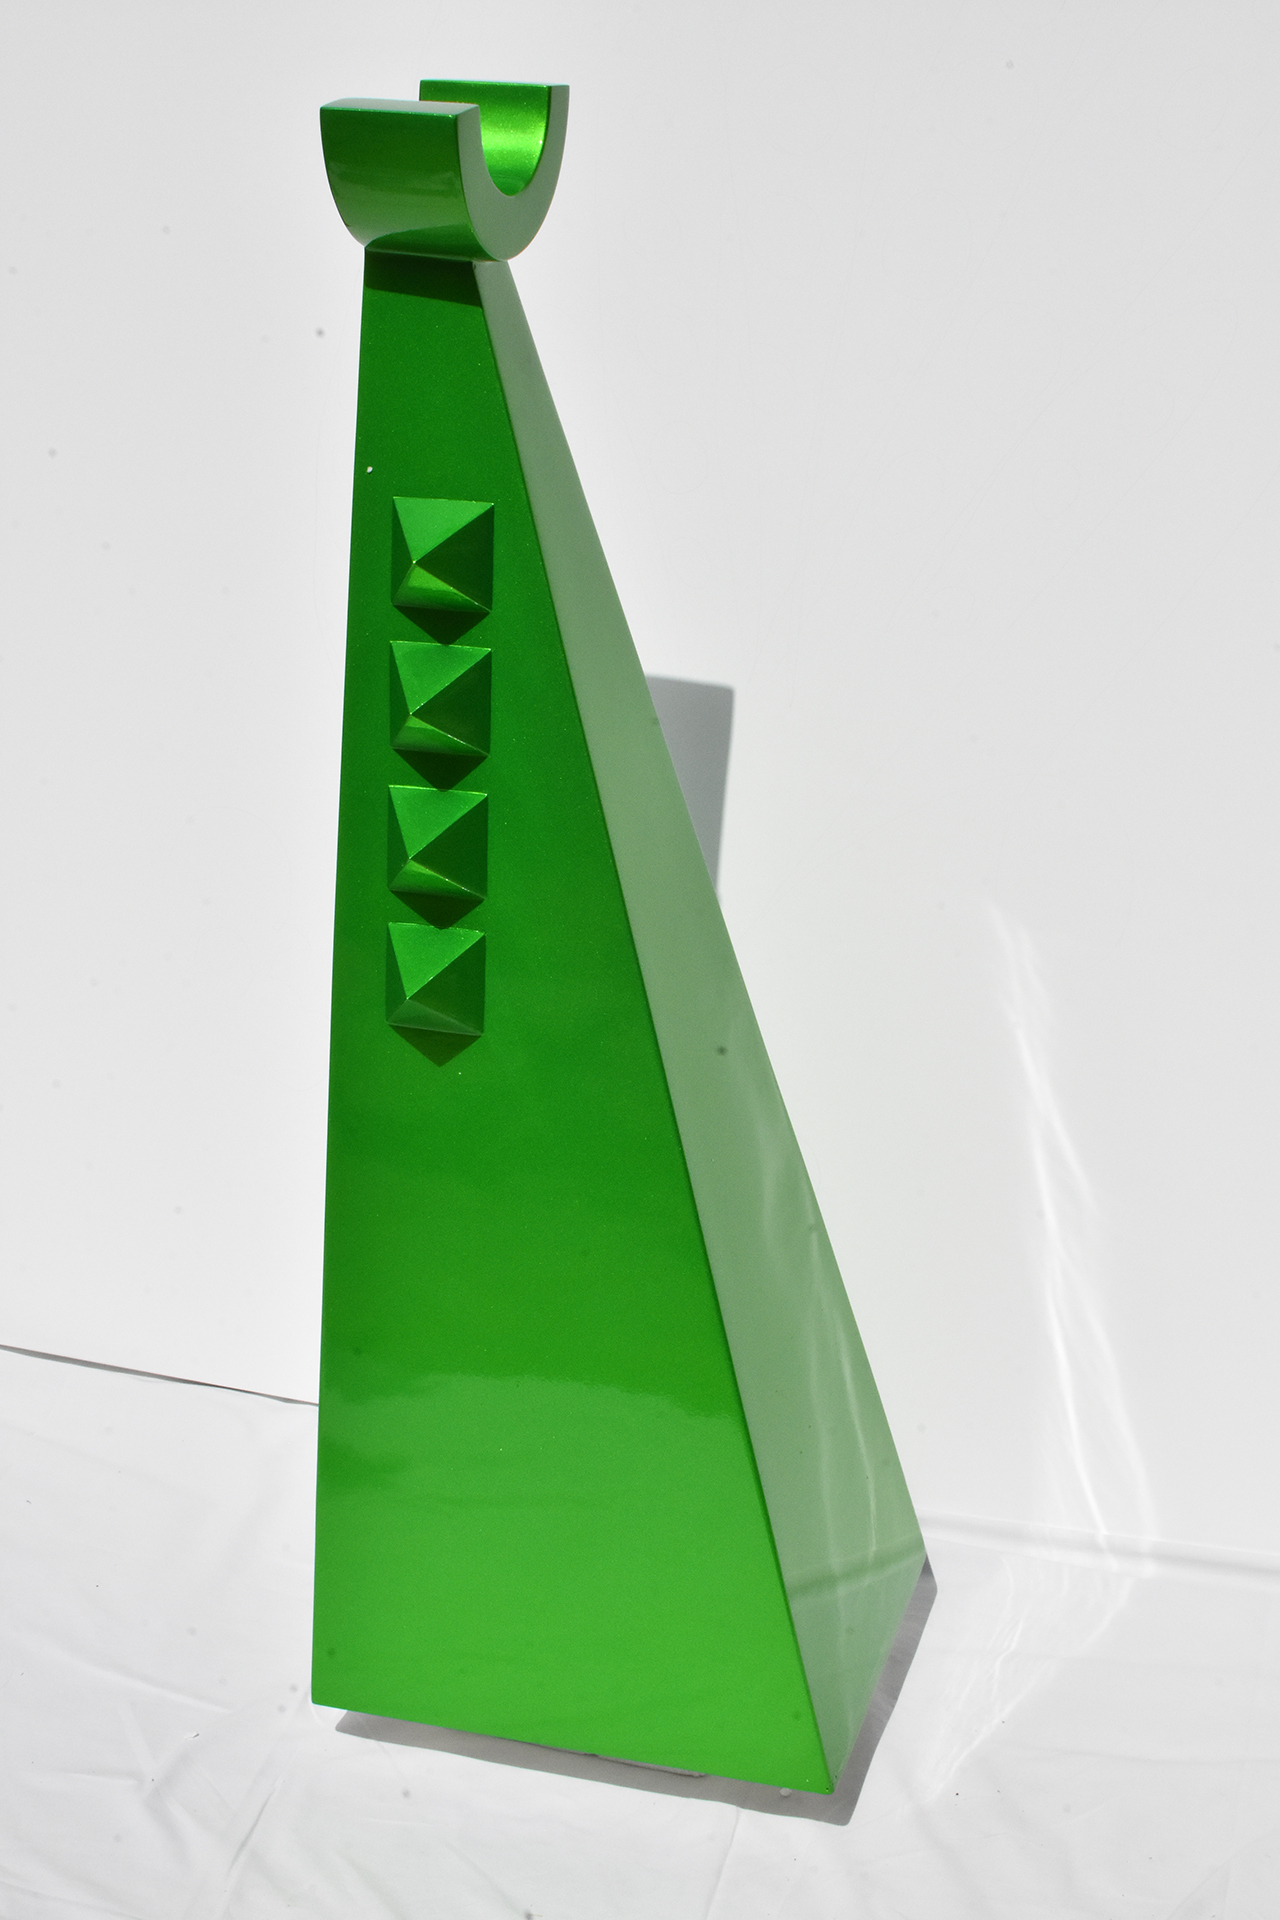 Drago verde 2022 Gesso acrilico smaltato Glazed acrylic plaster 100 x 26 x 39 cm 39x 10 x 15 in NIK_9914